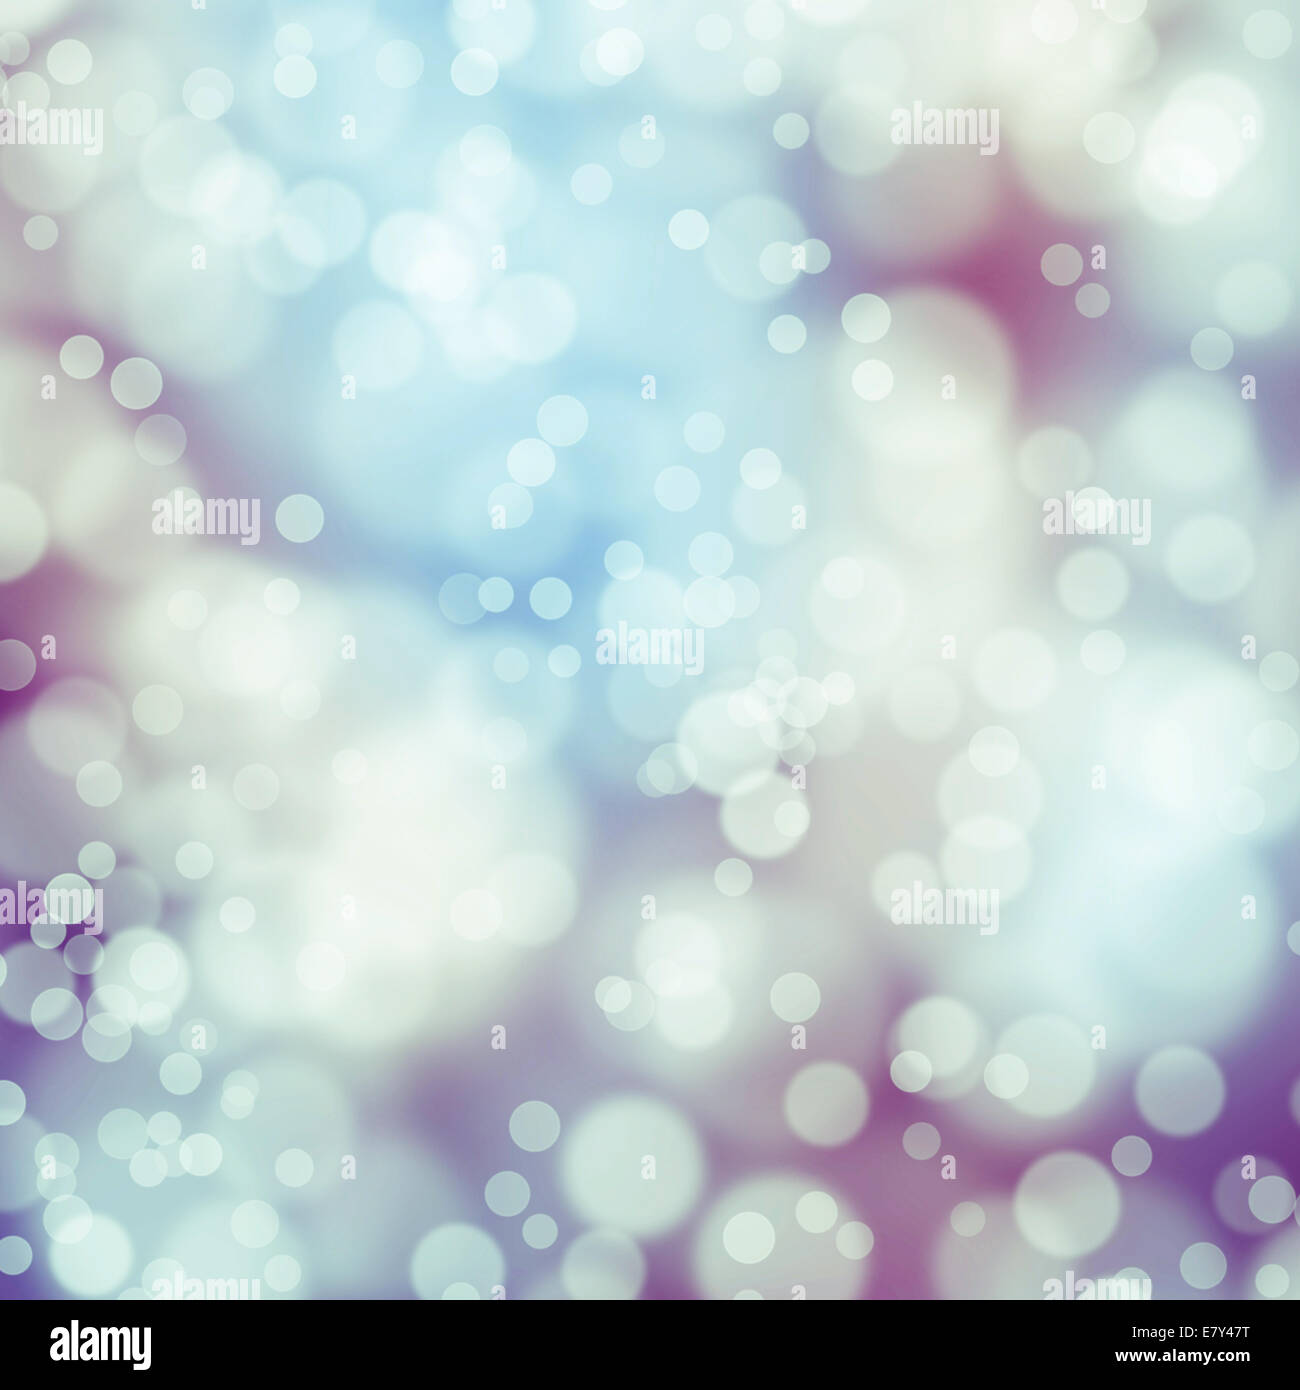 Light blurred background Stock Photo